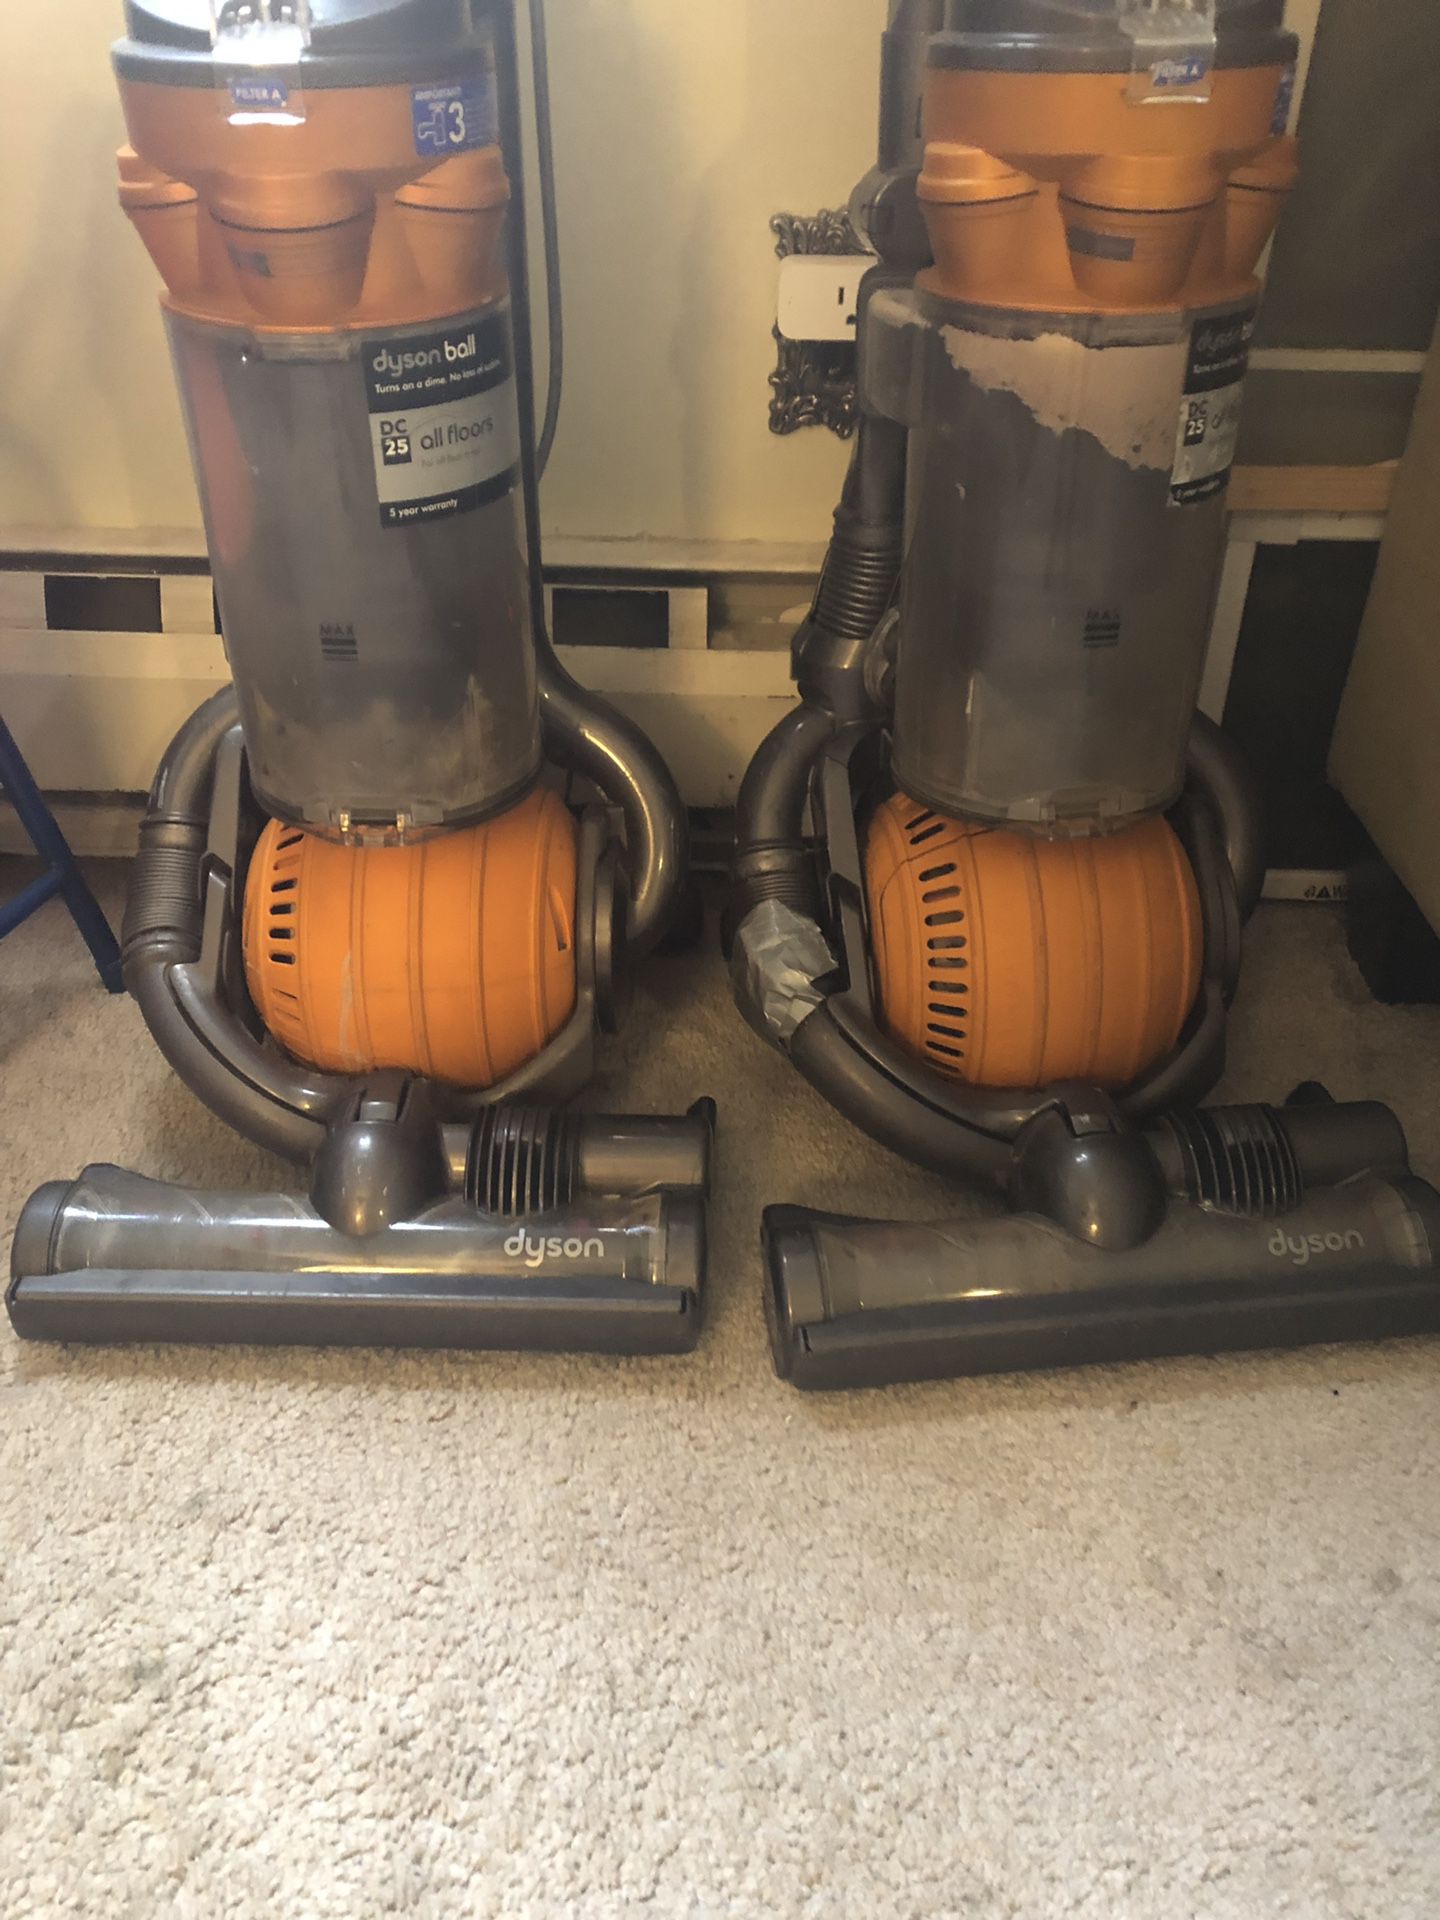 Dyson vacuums